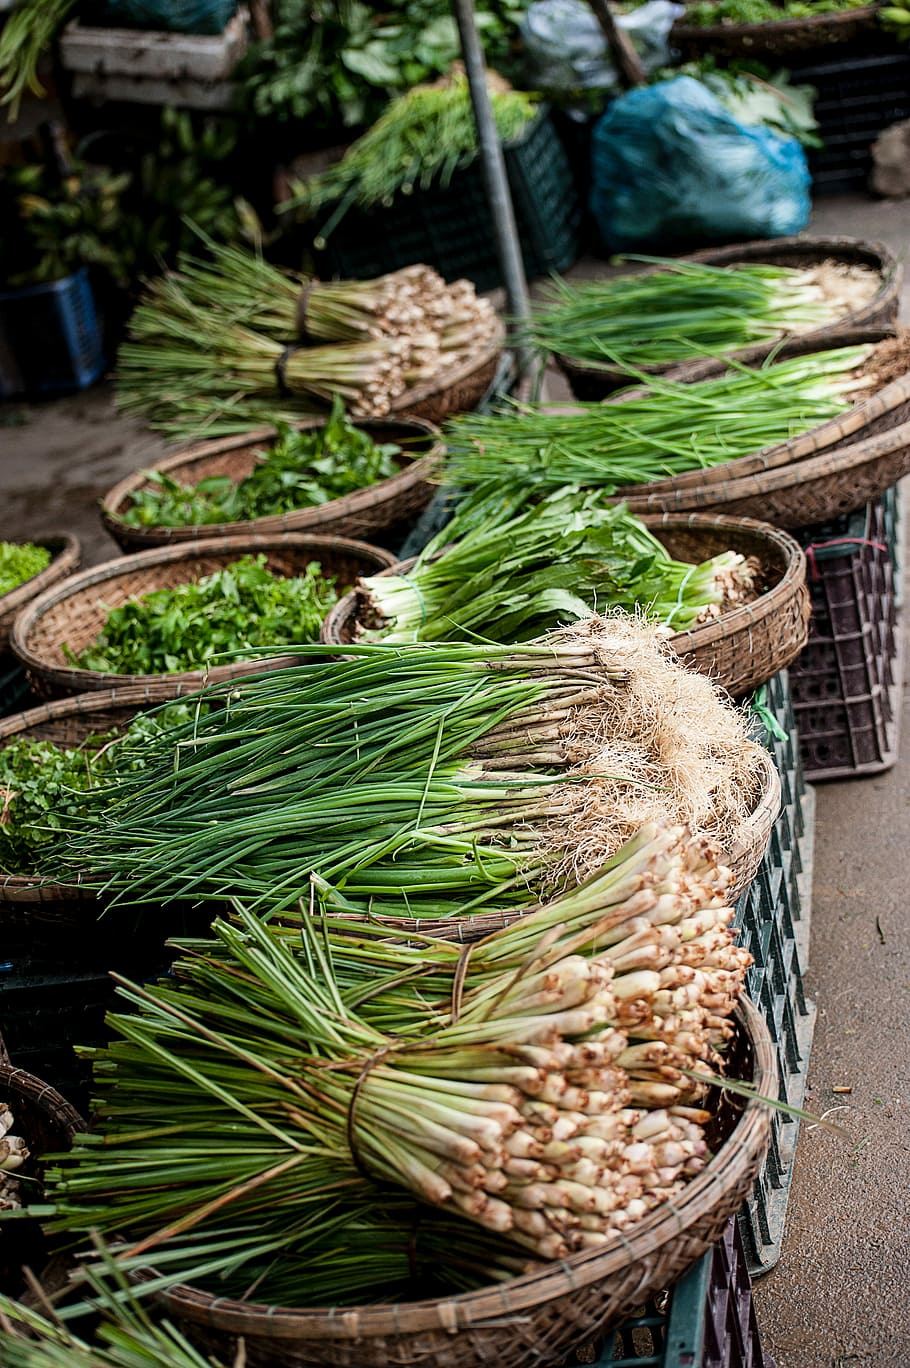 pasar sayur, sayur, pasar, keranjang, pasar makanan, hijau, ramuan, herbal, bawang merah, daun bawang